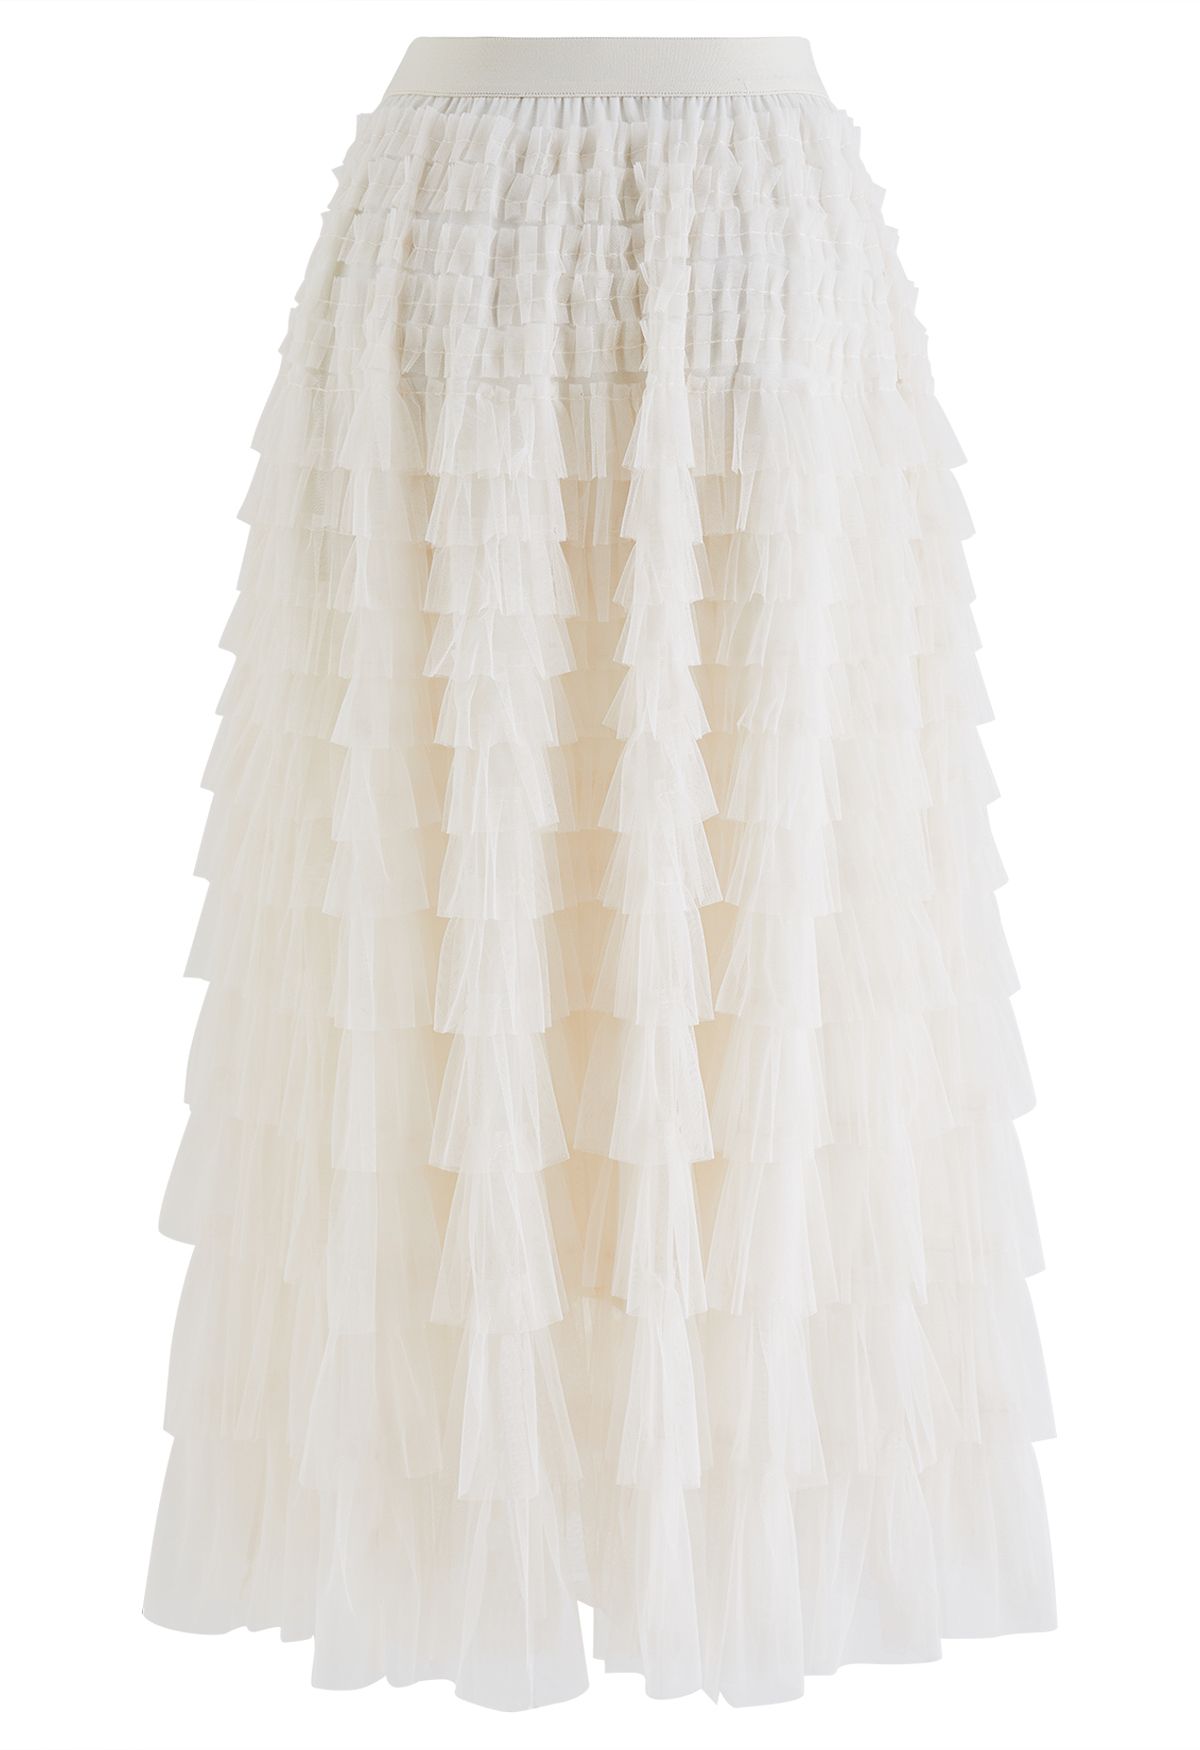 Swan Cloud Midi Skirt in Cream - Retro, Indie and Unique Fashion